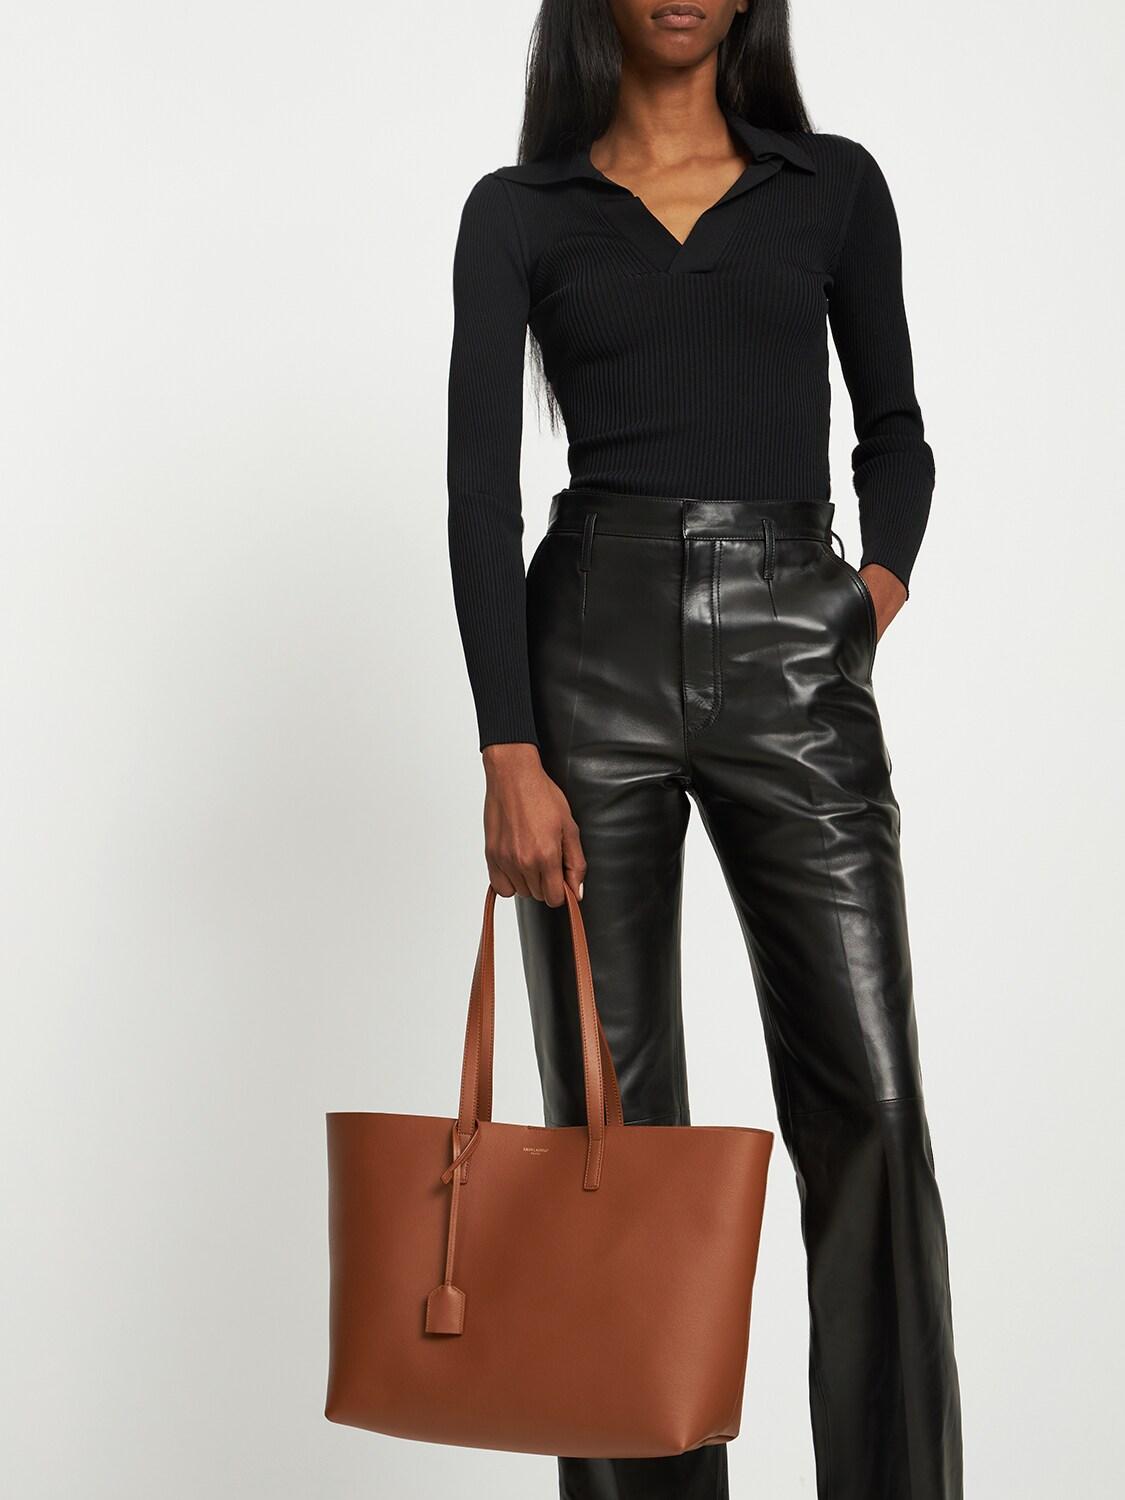 Saint Laurent Smooth Leather Tote Bag in Black | Lyst Australia